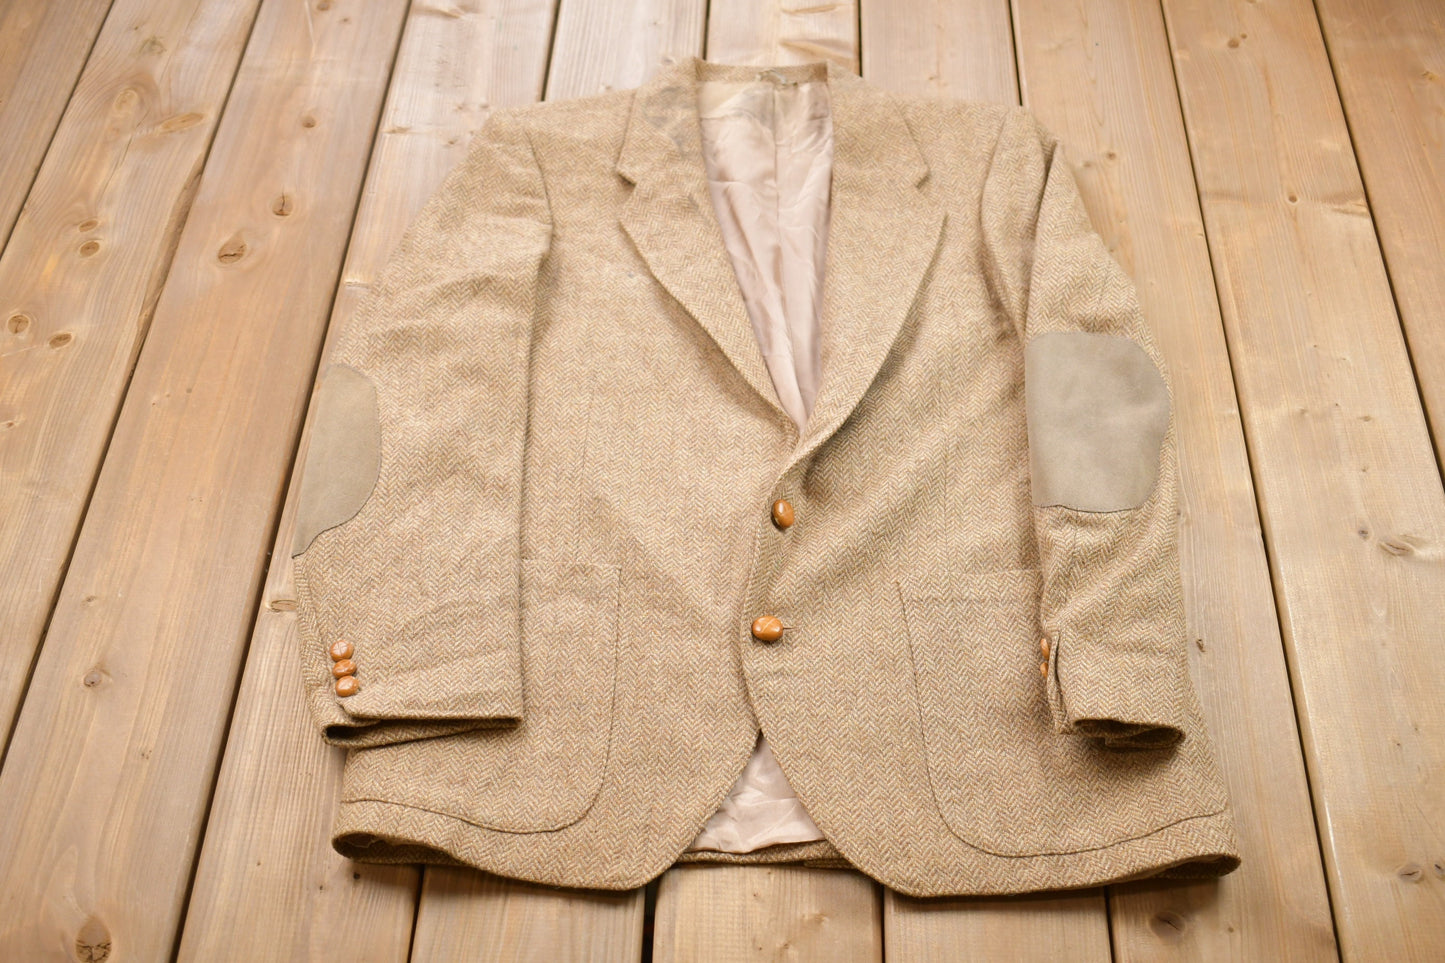 Vintage 1990s Wool Blazer Jacket / Wool Jacket  / Vintage 90s Jacket / Outdoor / Winter / Vintage Blazer